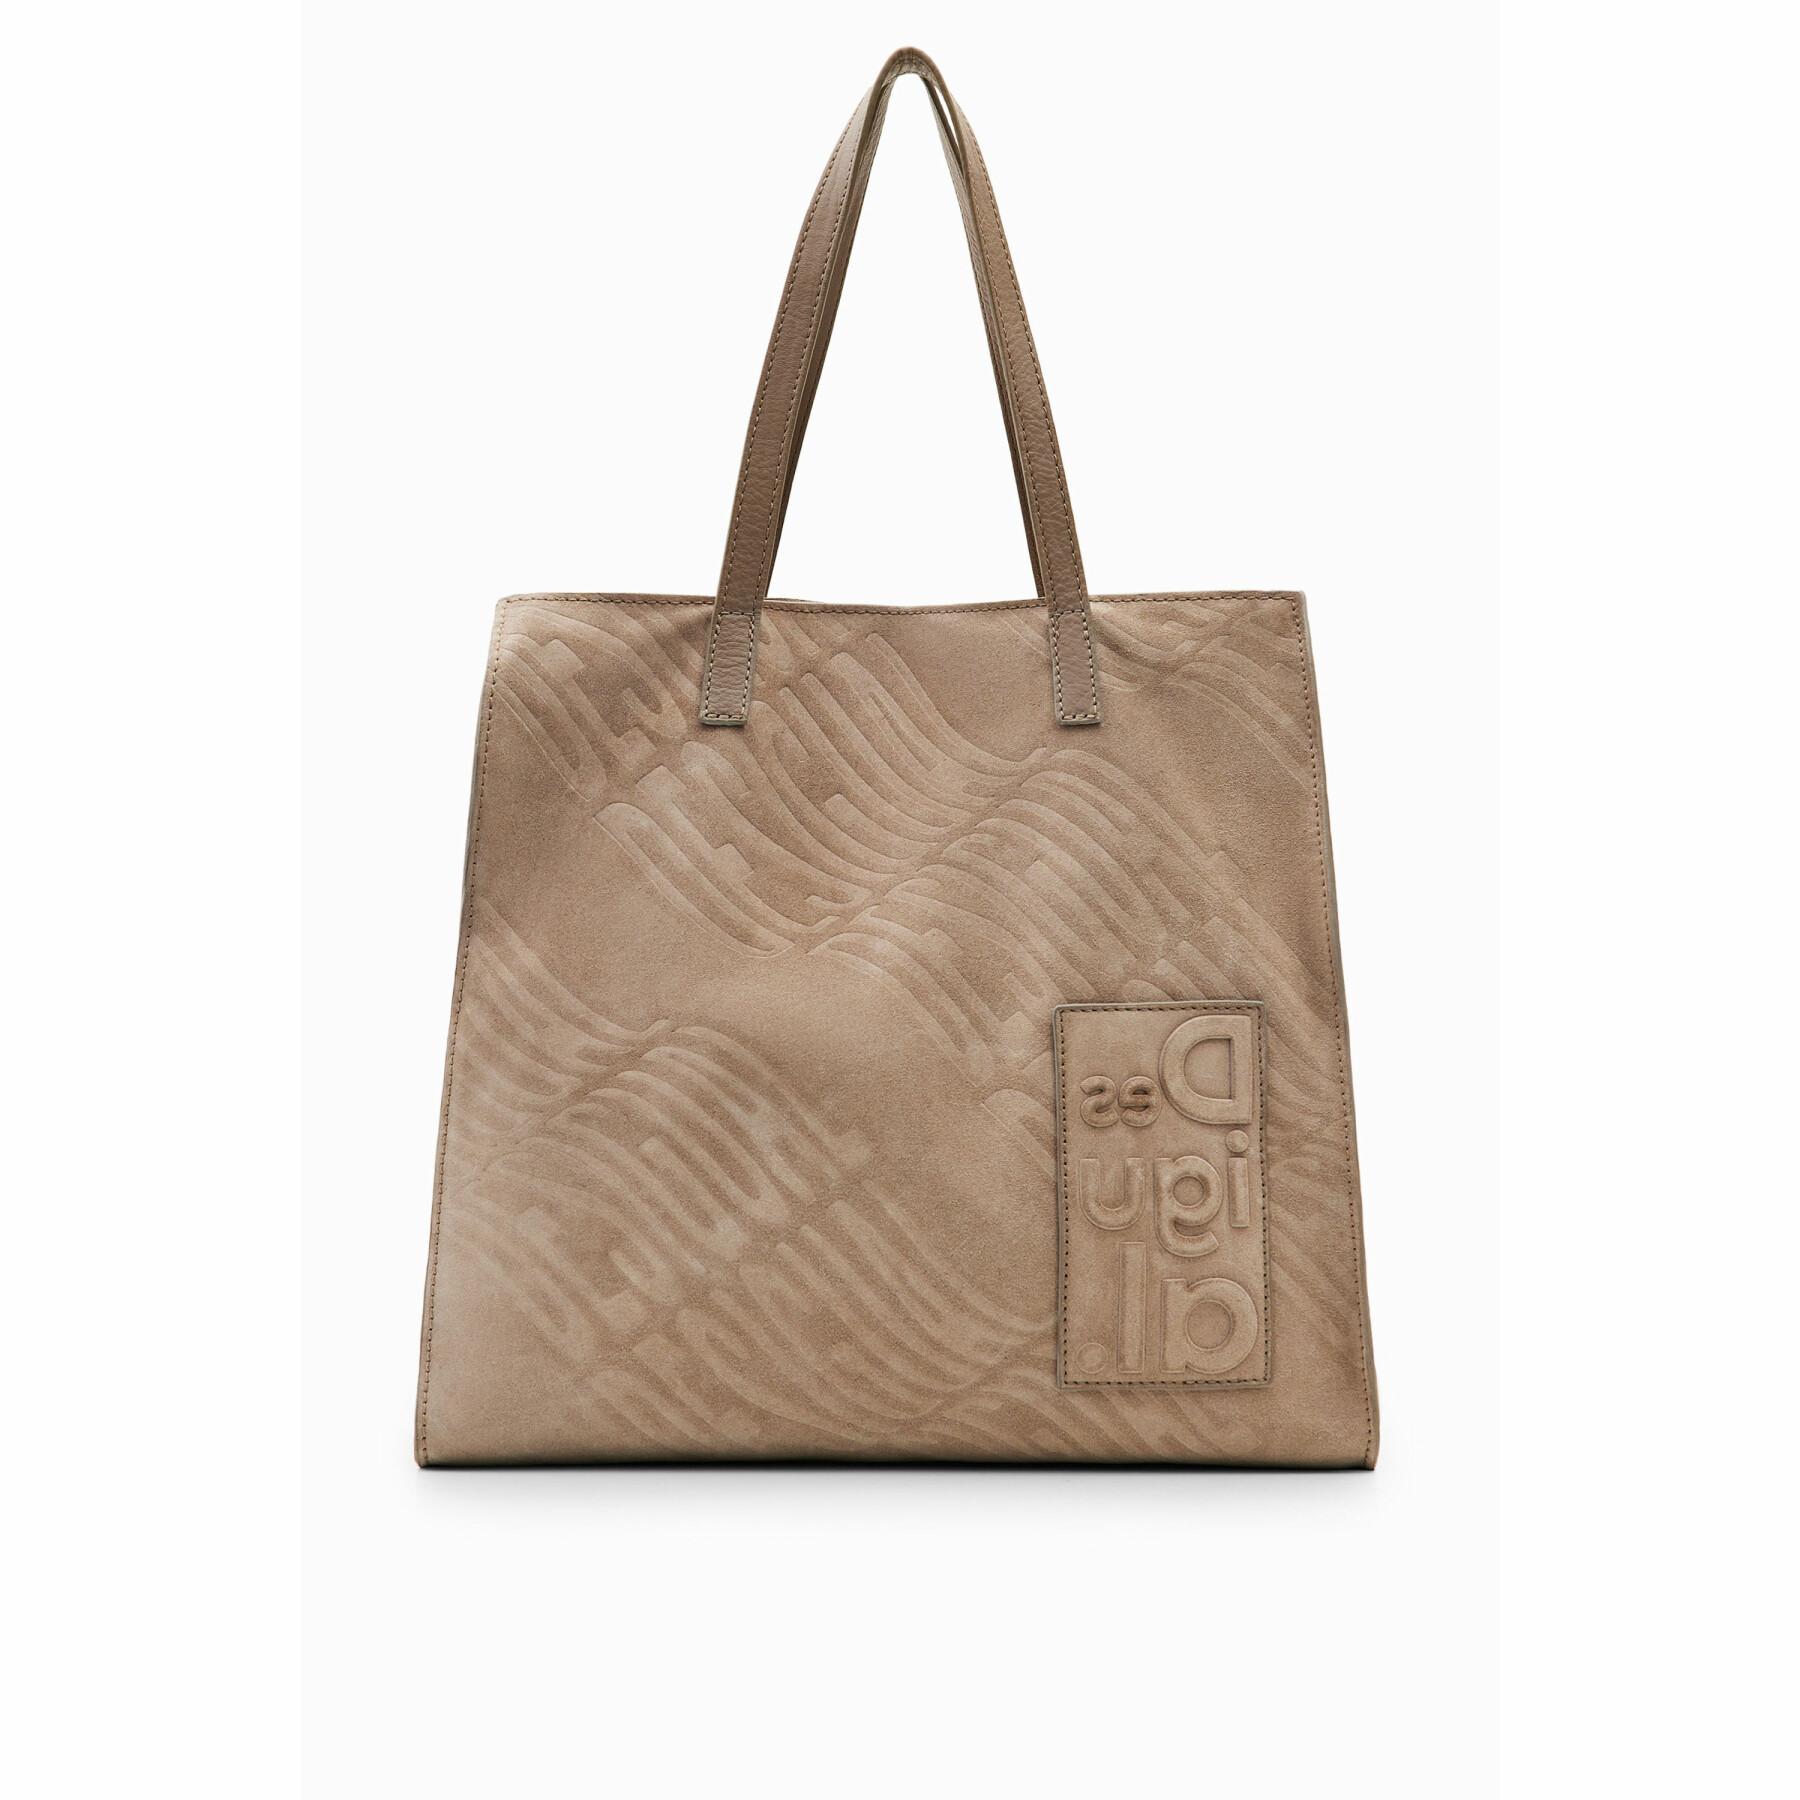 Women's handbag Desigual Logorama Leather Merlo V